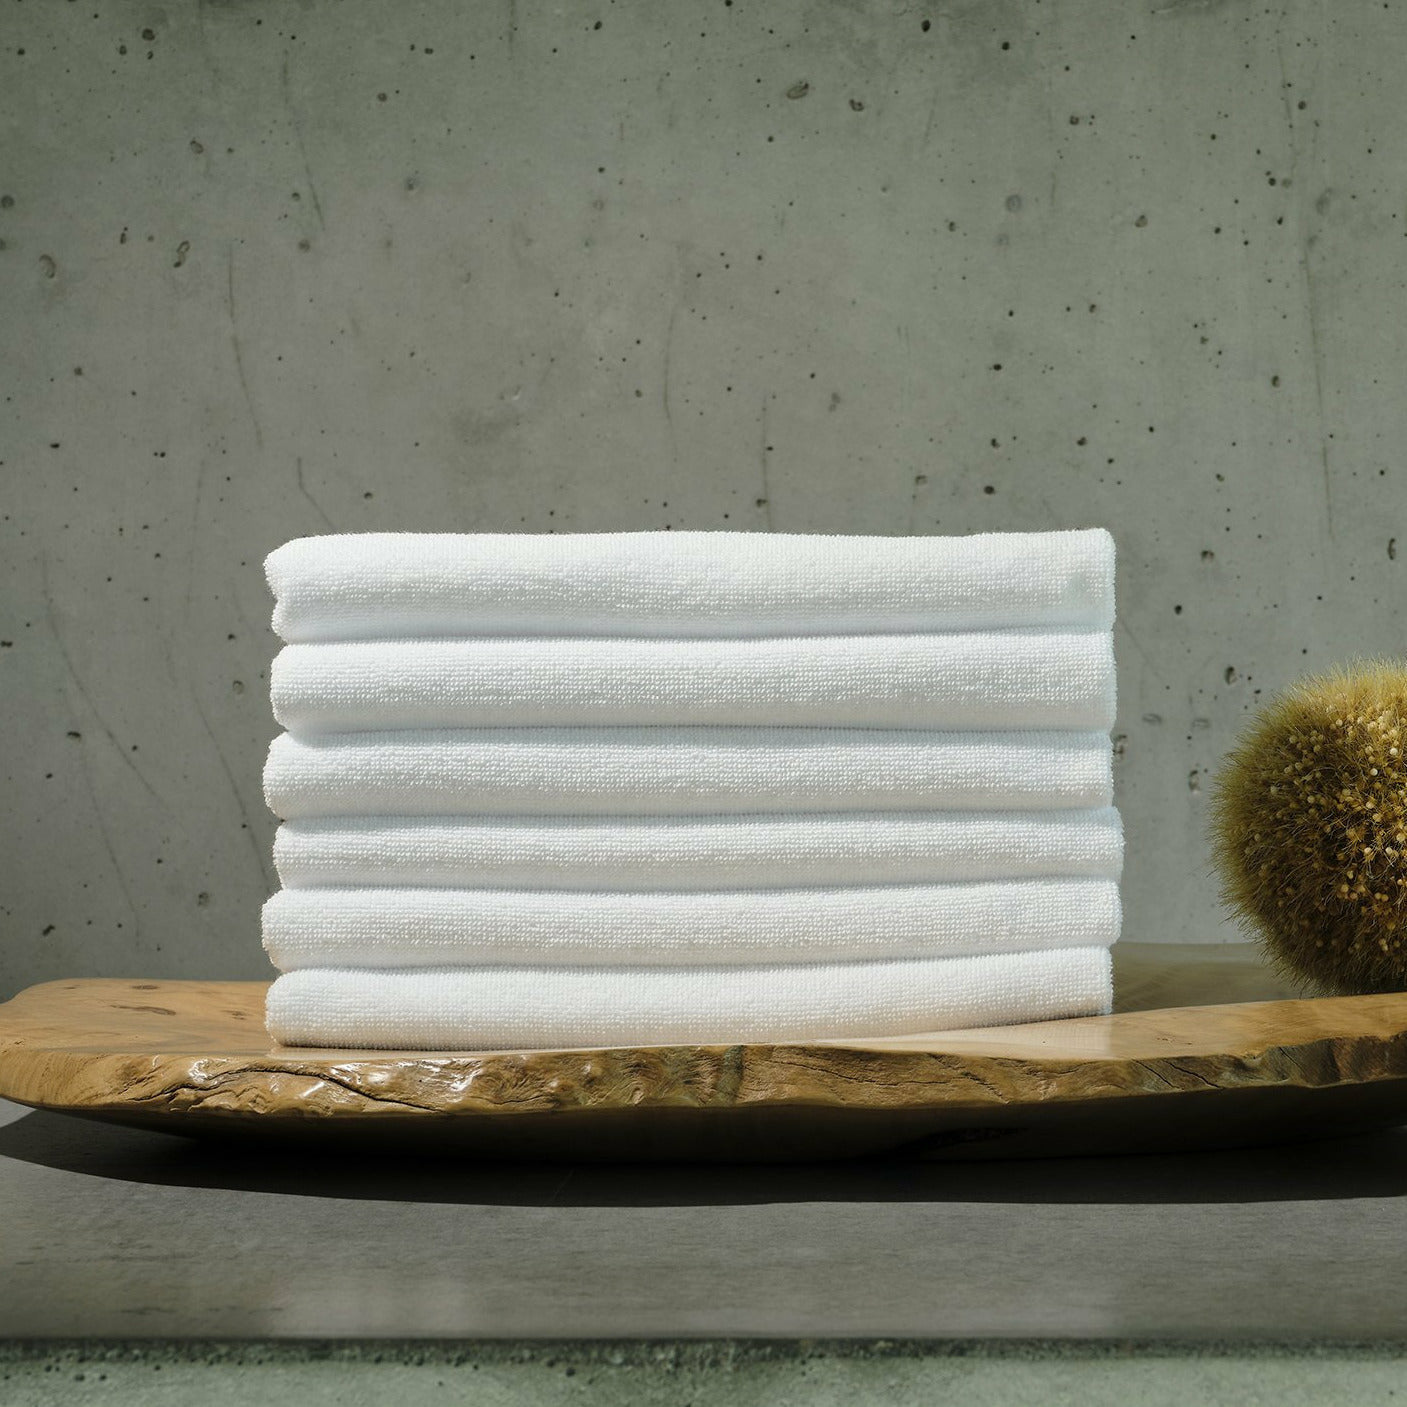 Pre-washed Towel Set JUMBO Size Extra Soft Cotton Bath Towel Set,bathroom  Towel Set,big Towel,soft Hand Towel,spa Towel,terry Towel 